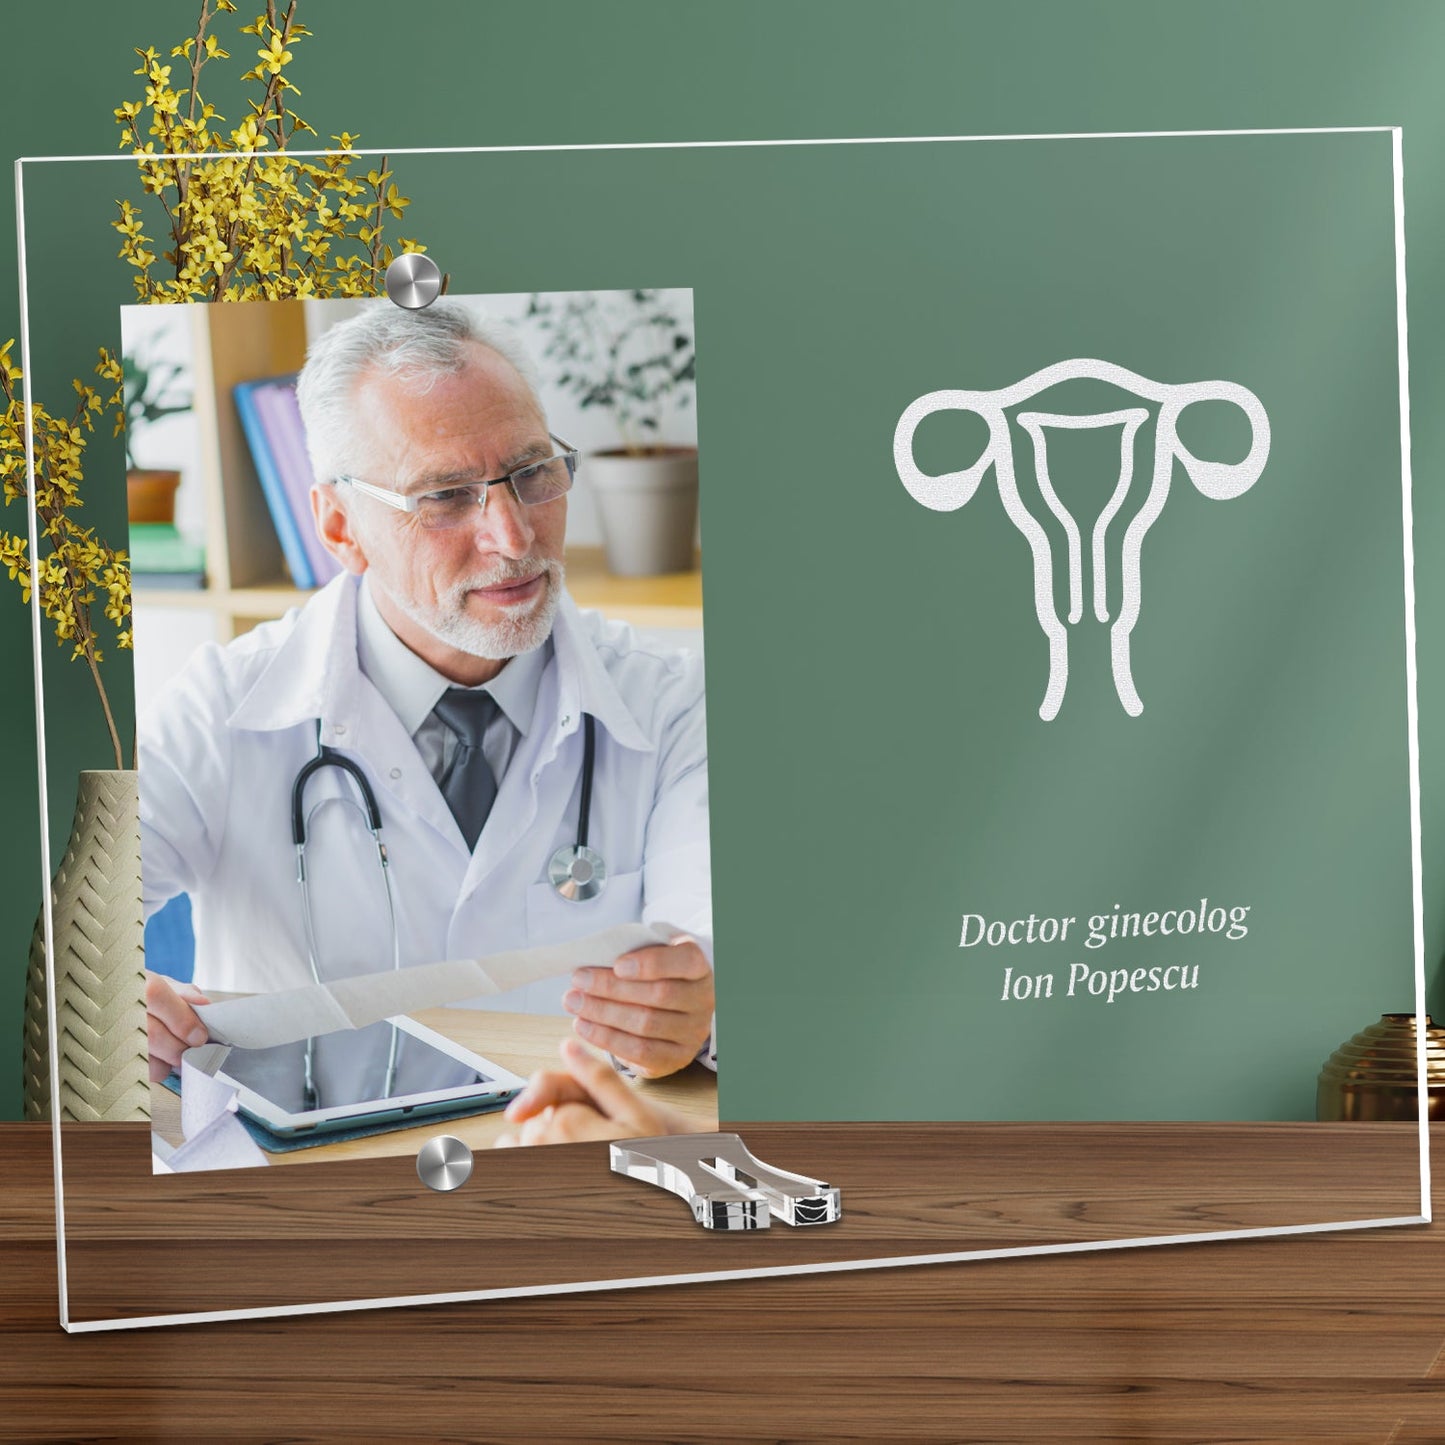 Cadou personalizat rama plexiglas - Doctor ginecolog - ghizbi.ro